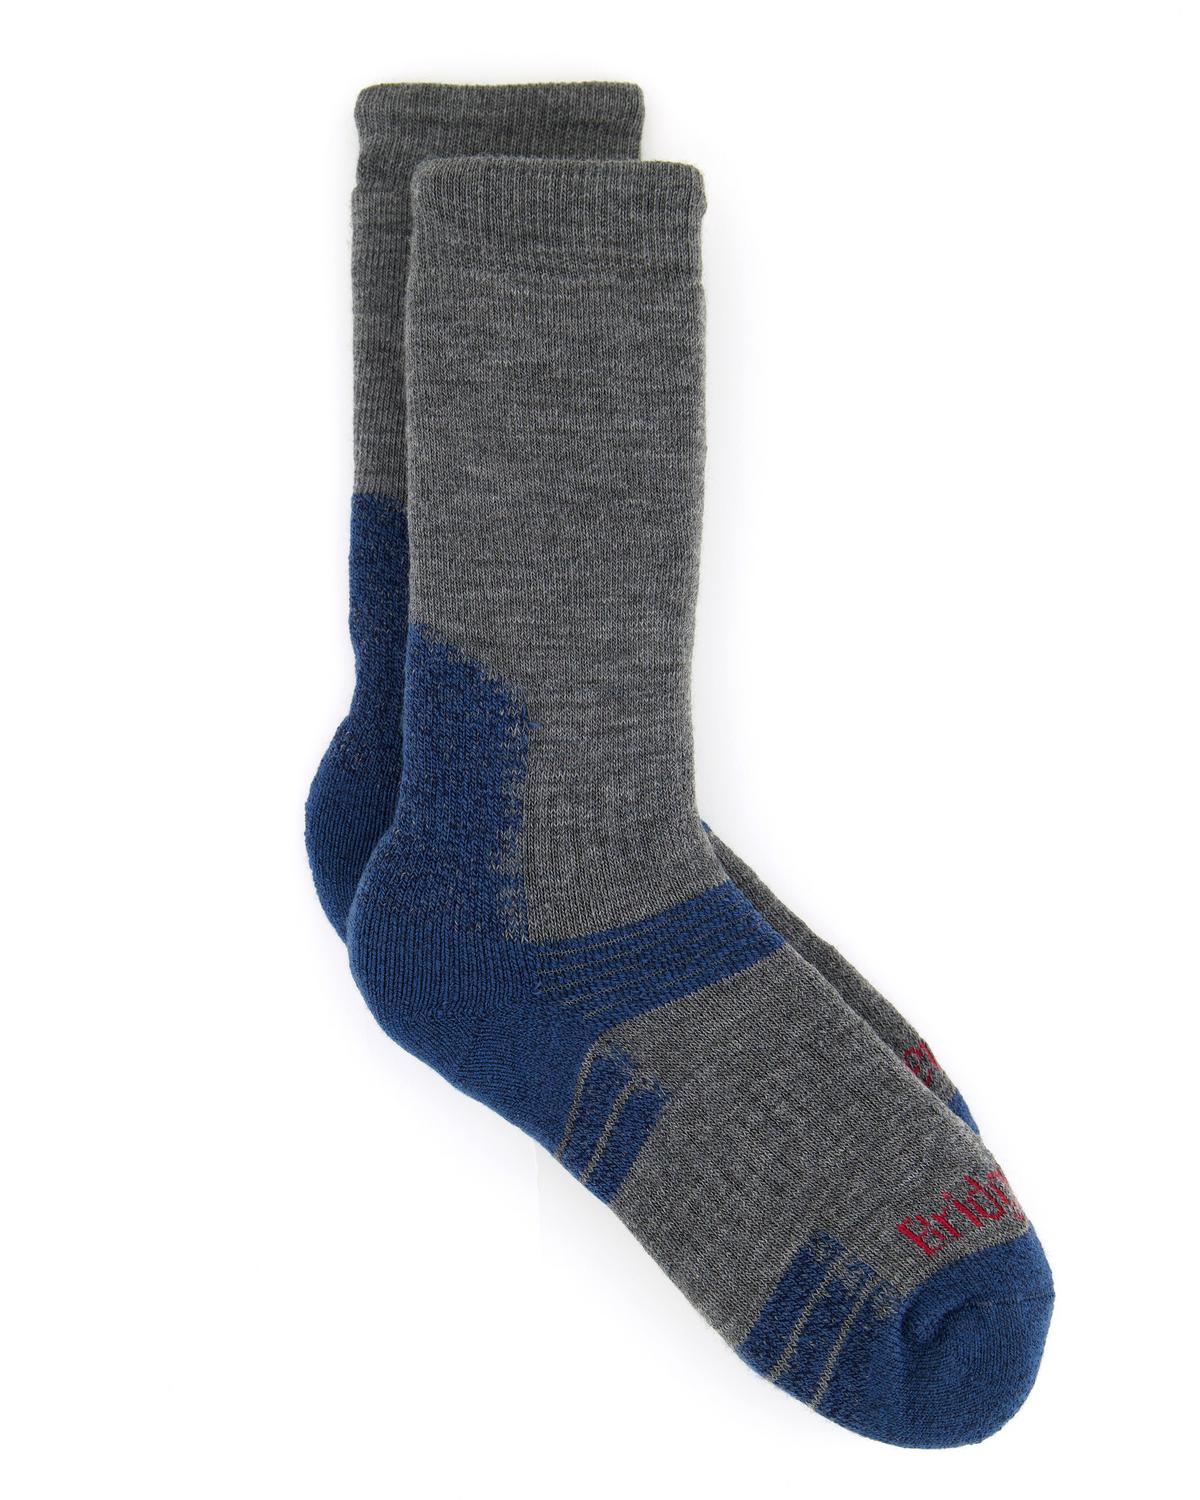 Bridgedale Explorer Heavyweight Endurance Socks  -  Grey/Blue